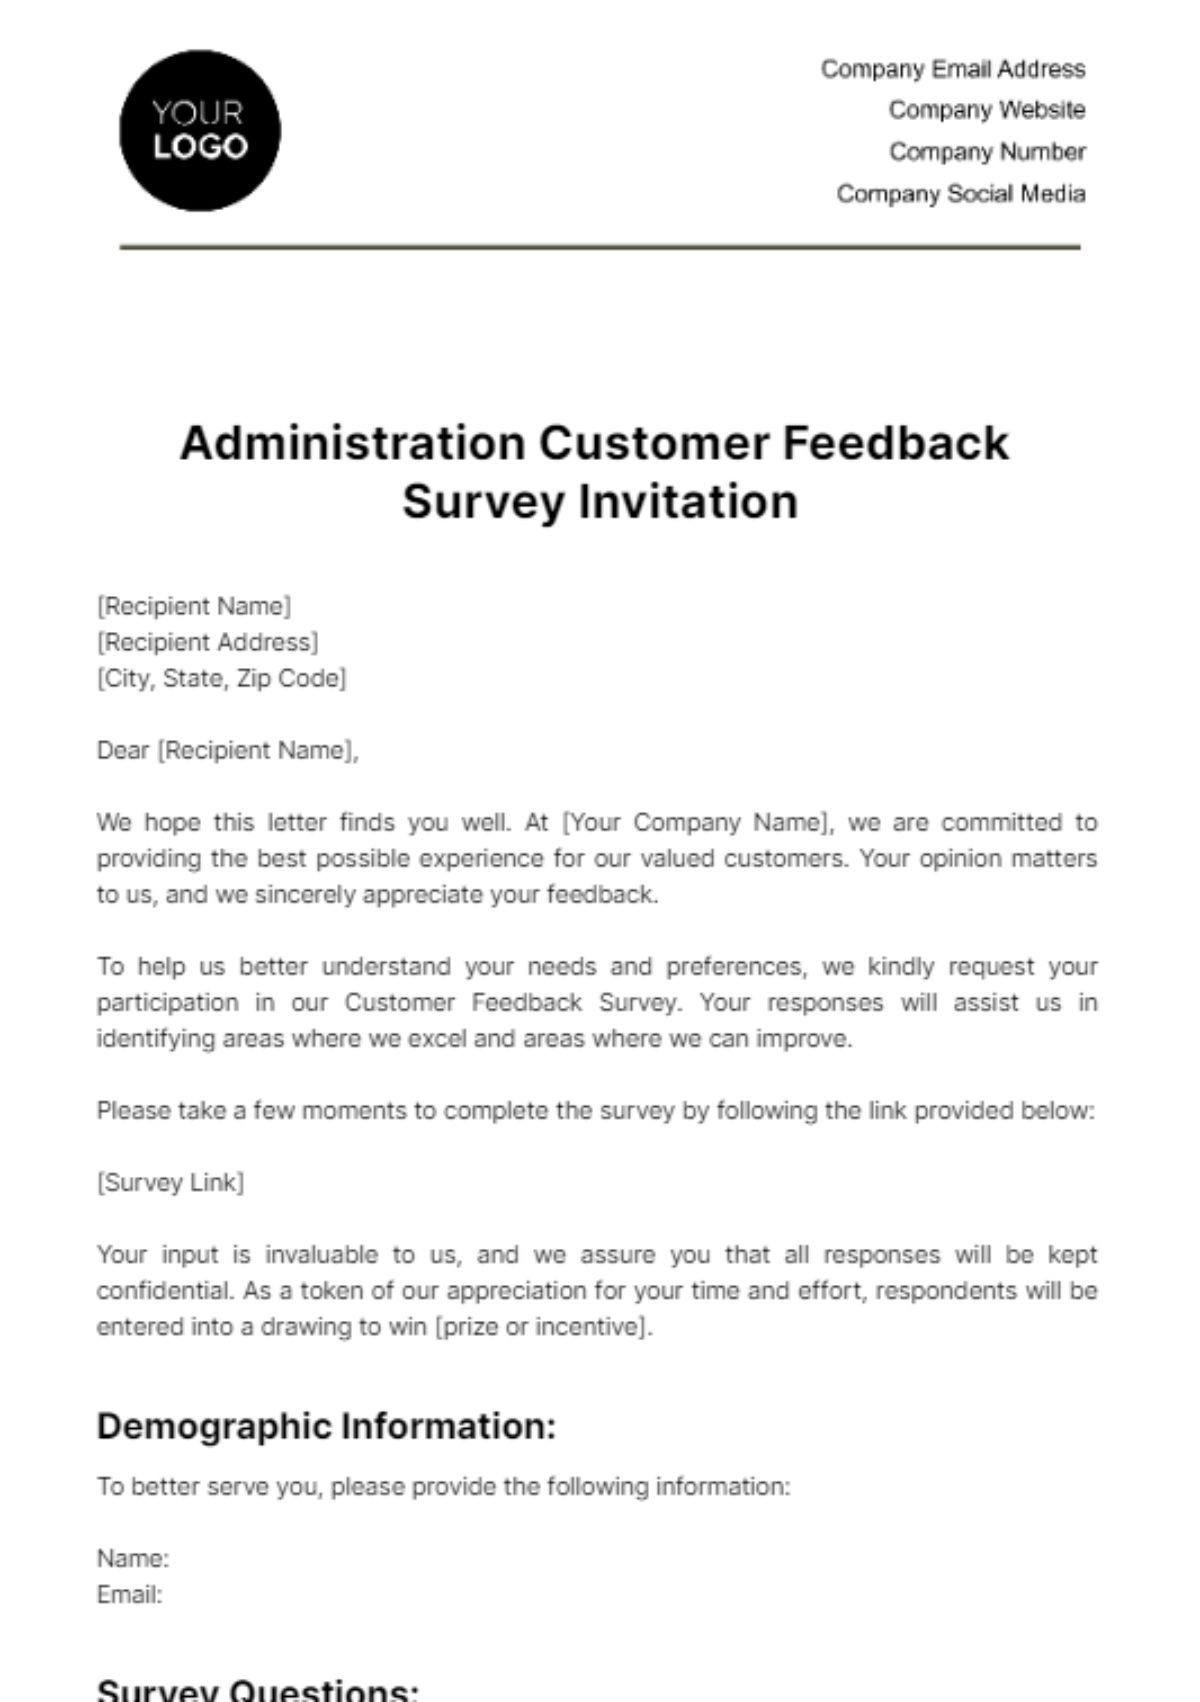 Administration Customer Feedback Survey Invitation Template